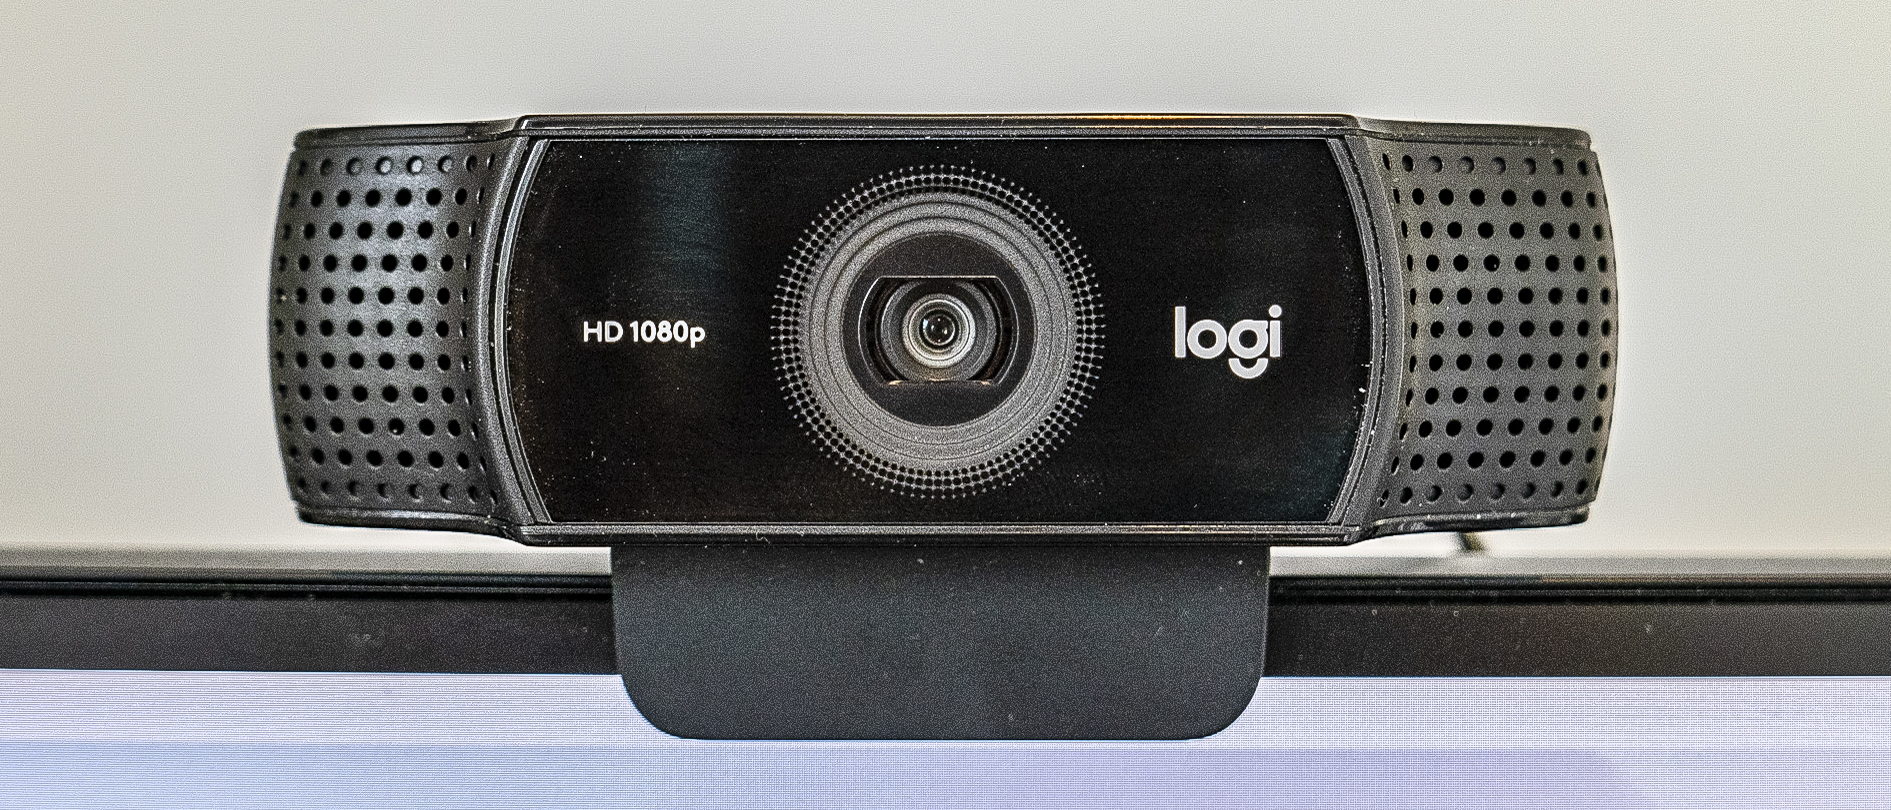 Logitech C922 Webcam with Tripod Stand